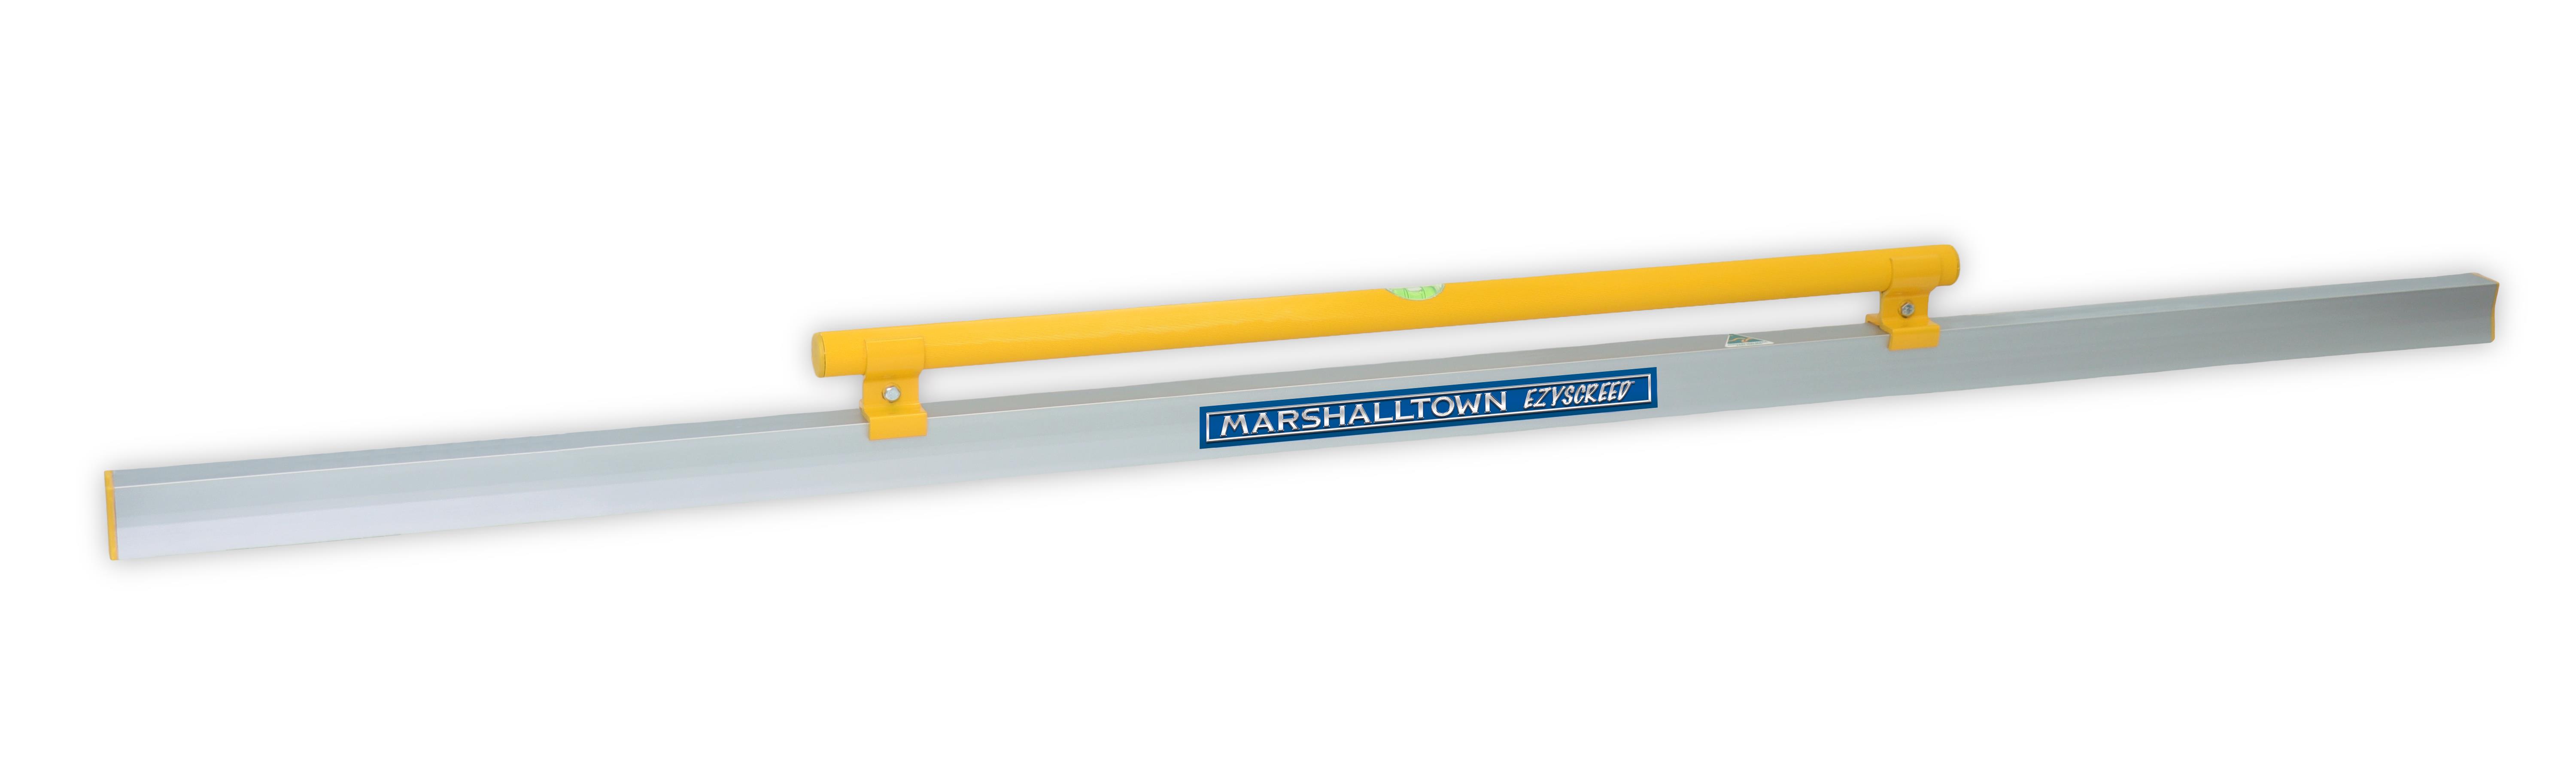 Marshalltown (28395) product